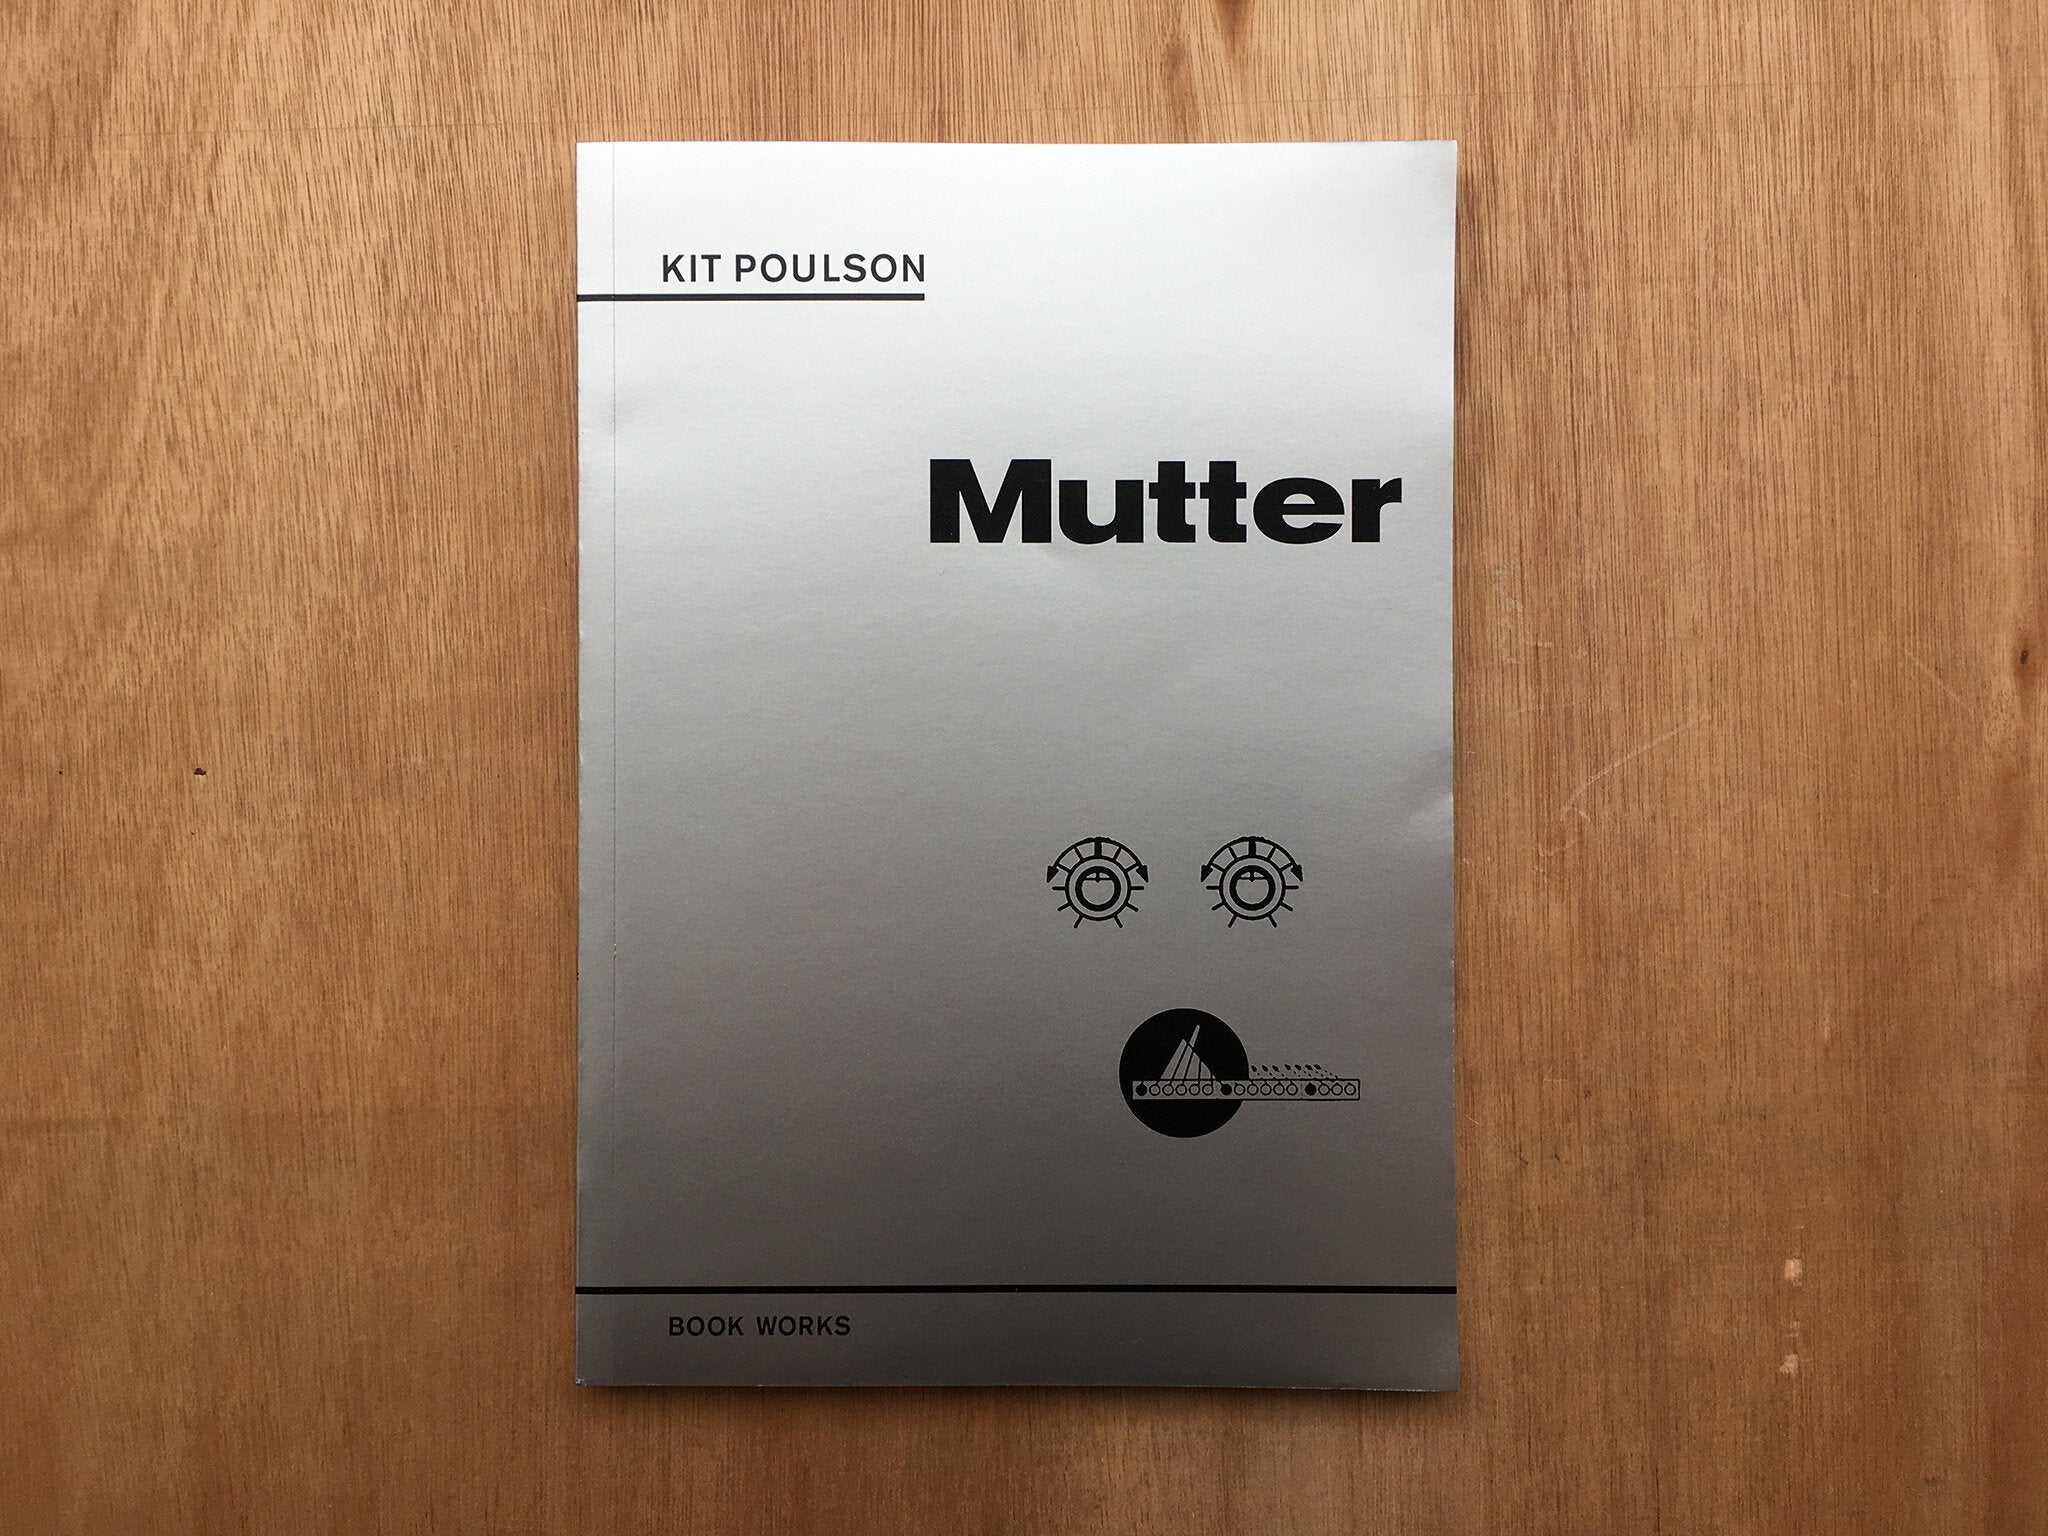 MUTTER by Kit Poulson